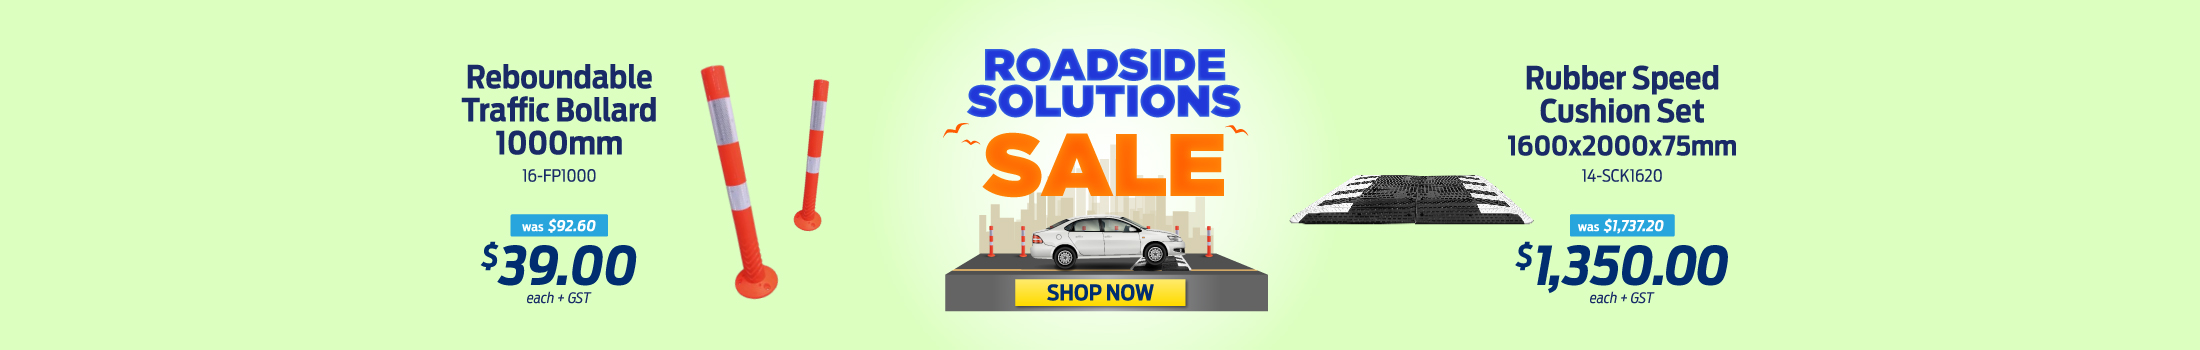 Roadside solution Sale Desktop -AU